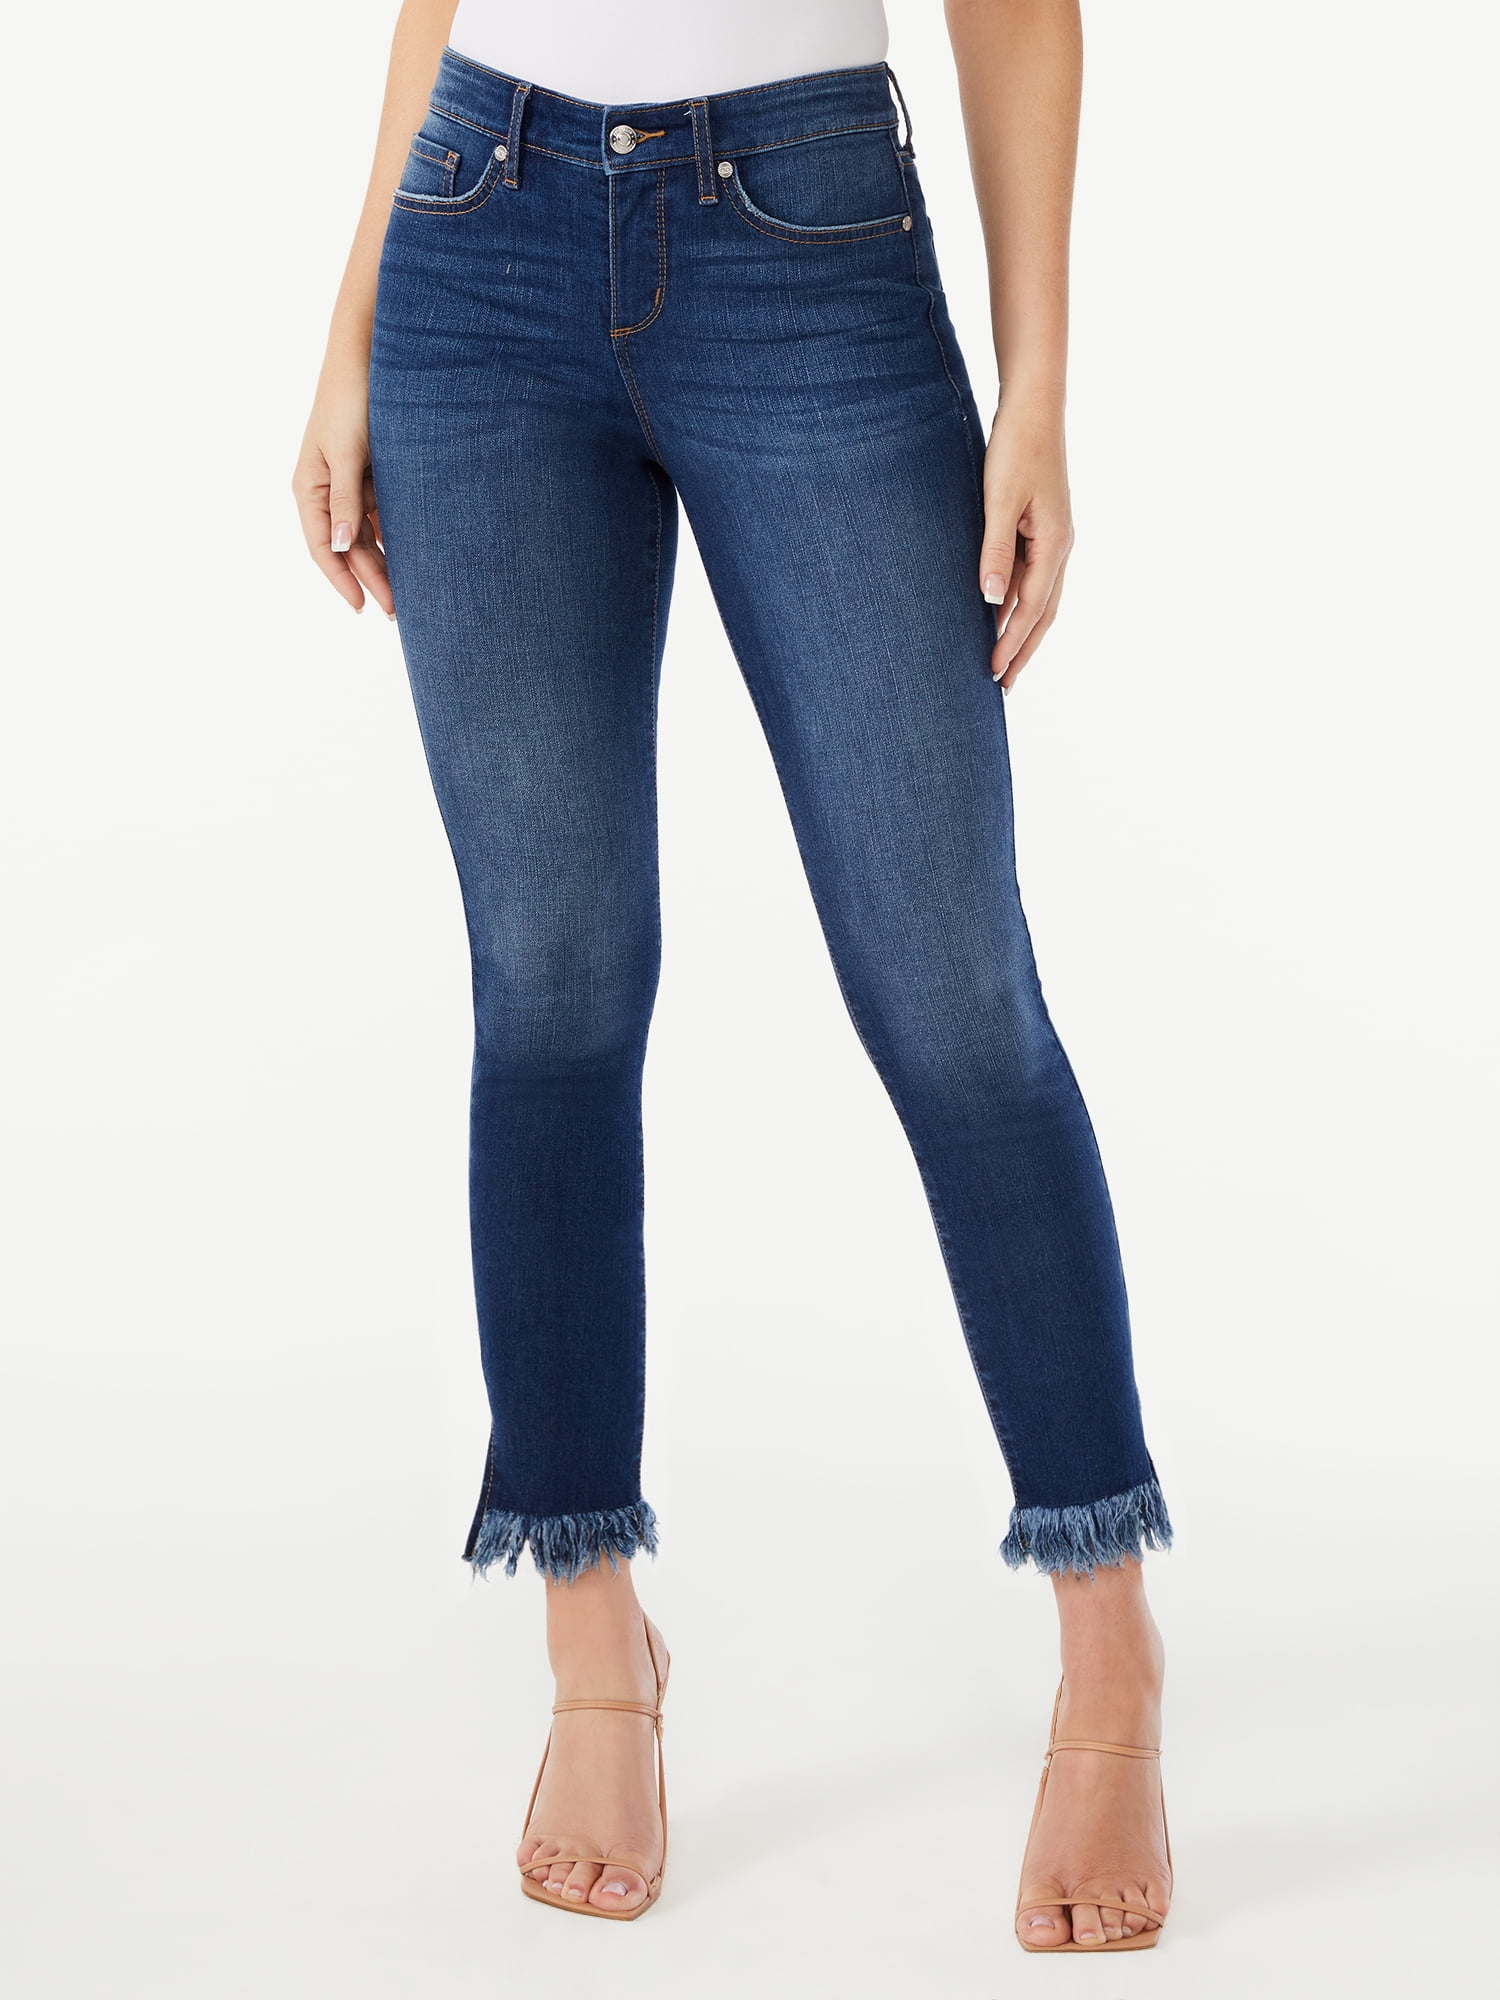 Sofia Jeans Women's Sofia Skinny Mid Rise Crop Jeans - Walmart.com